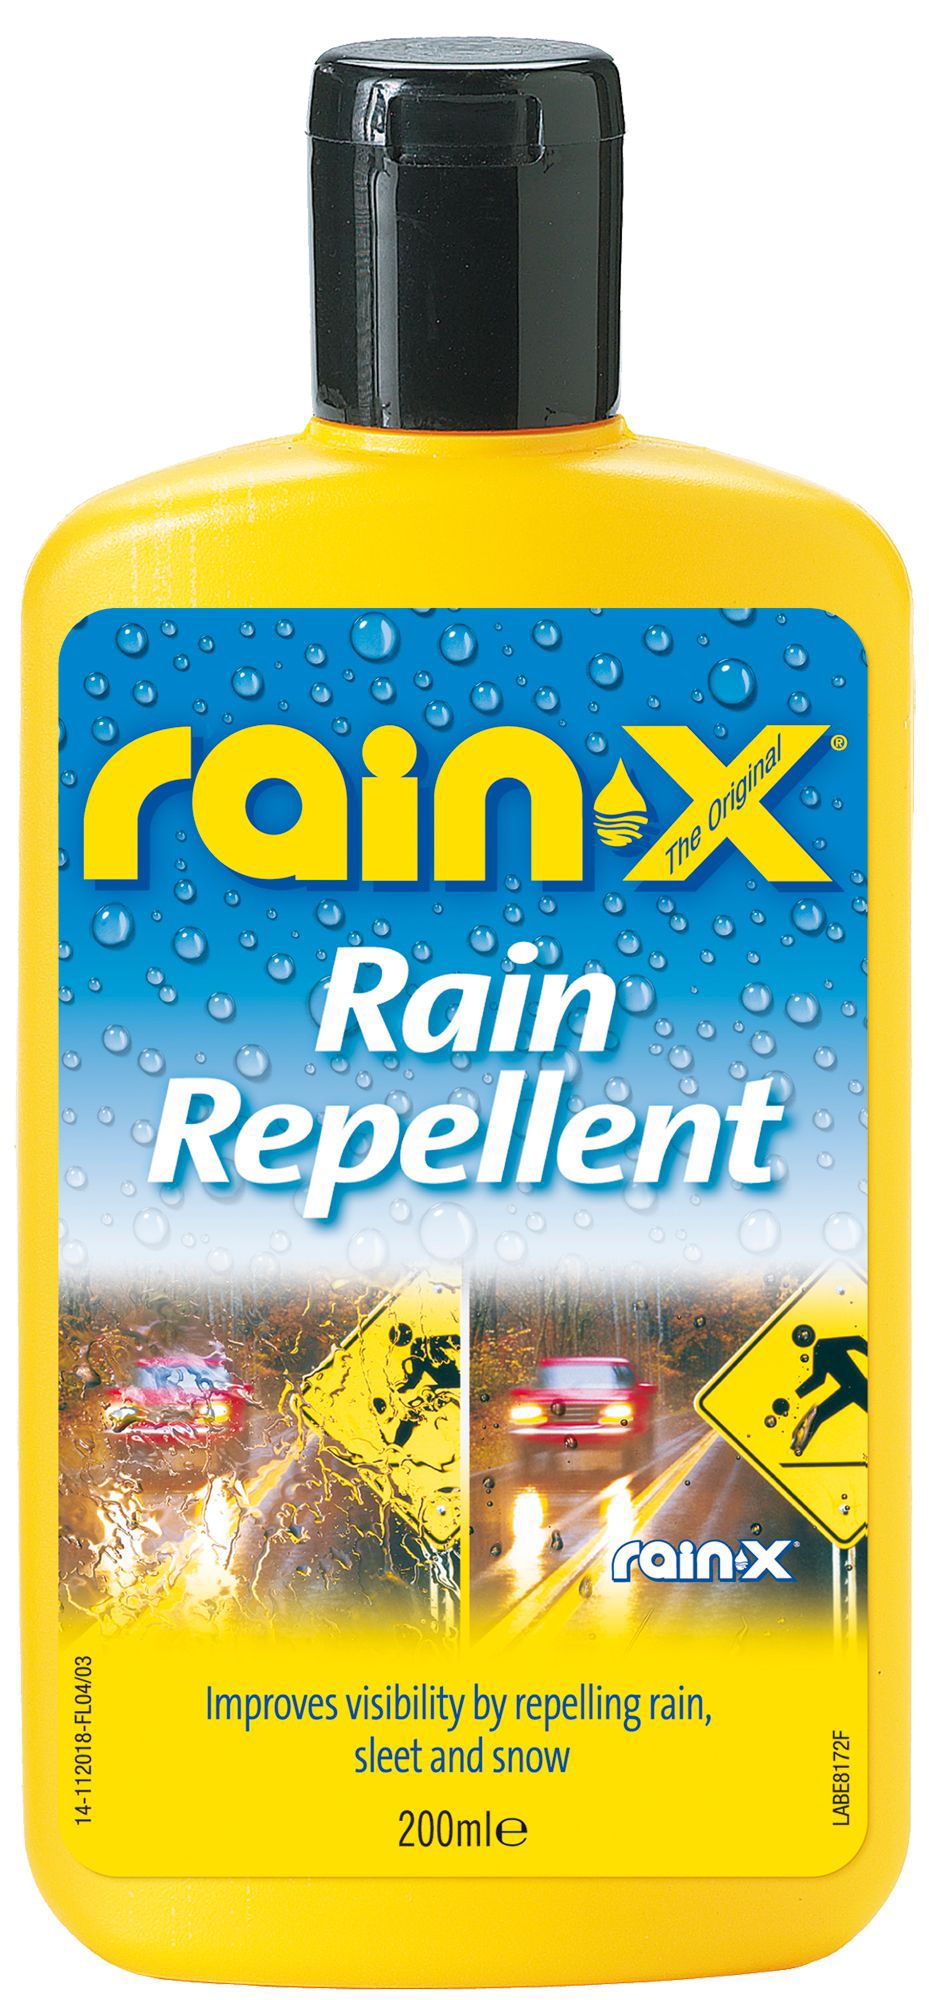 Rain X Yellow Mirror & windscreen Rain repellent wax, 200ml Bottle